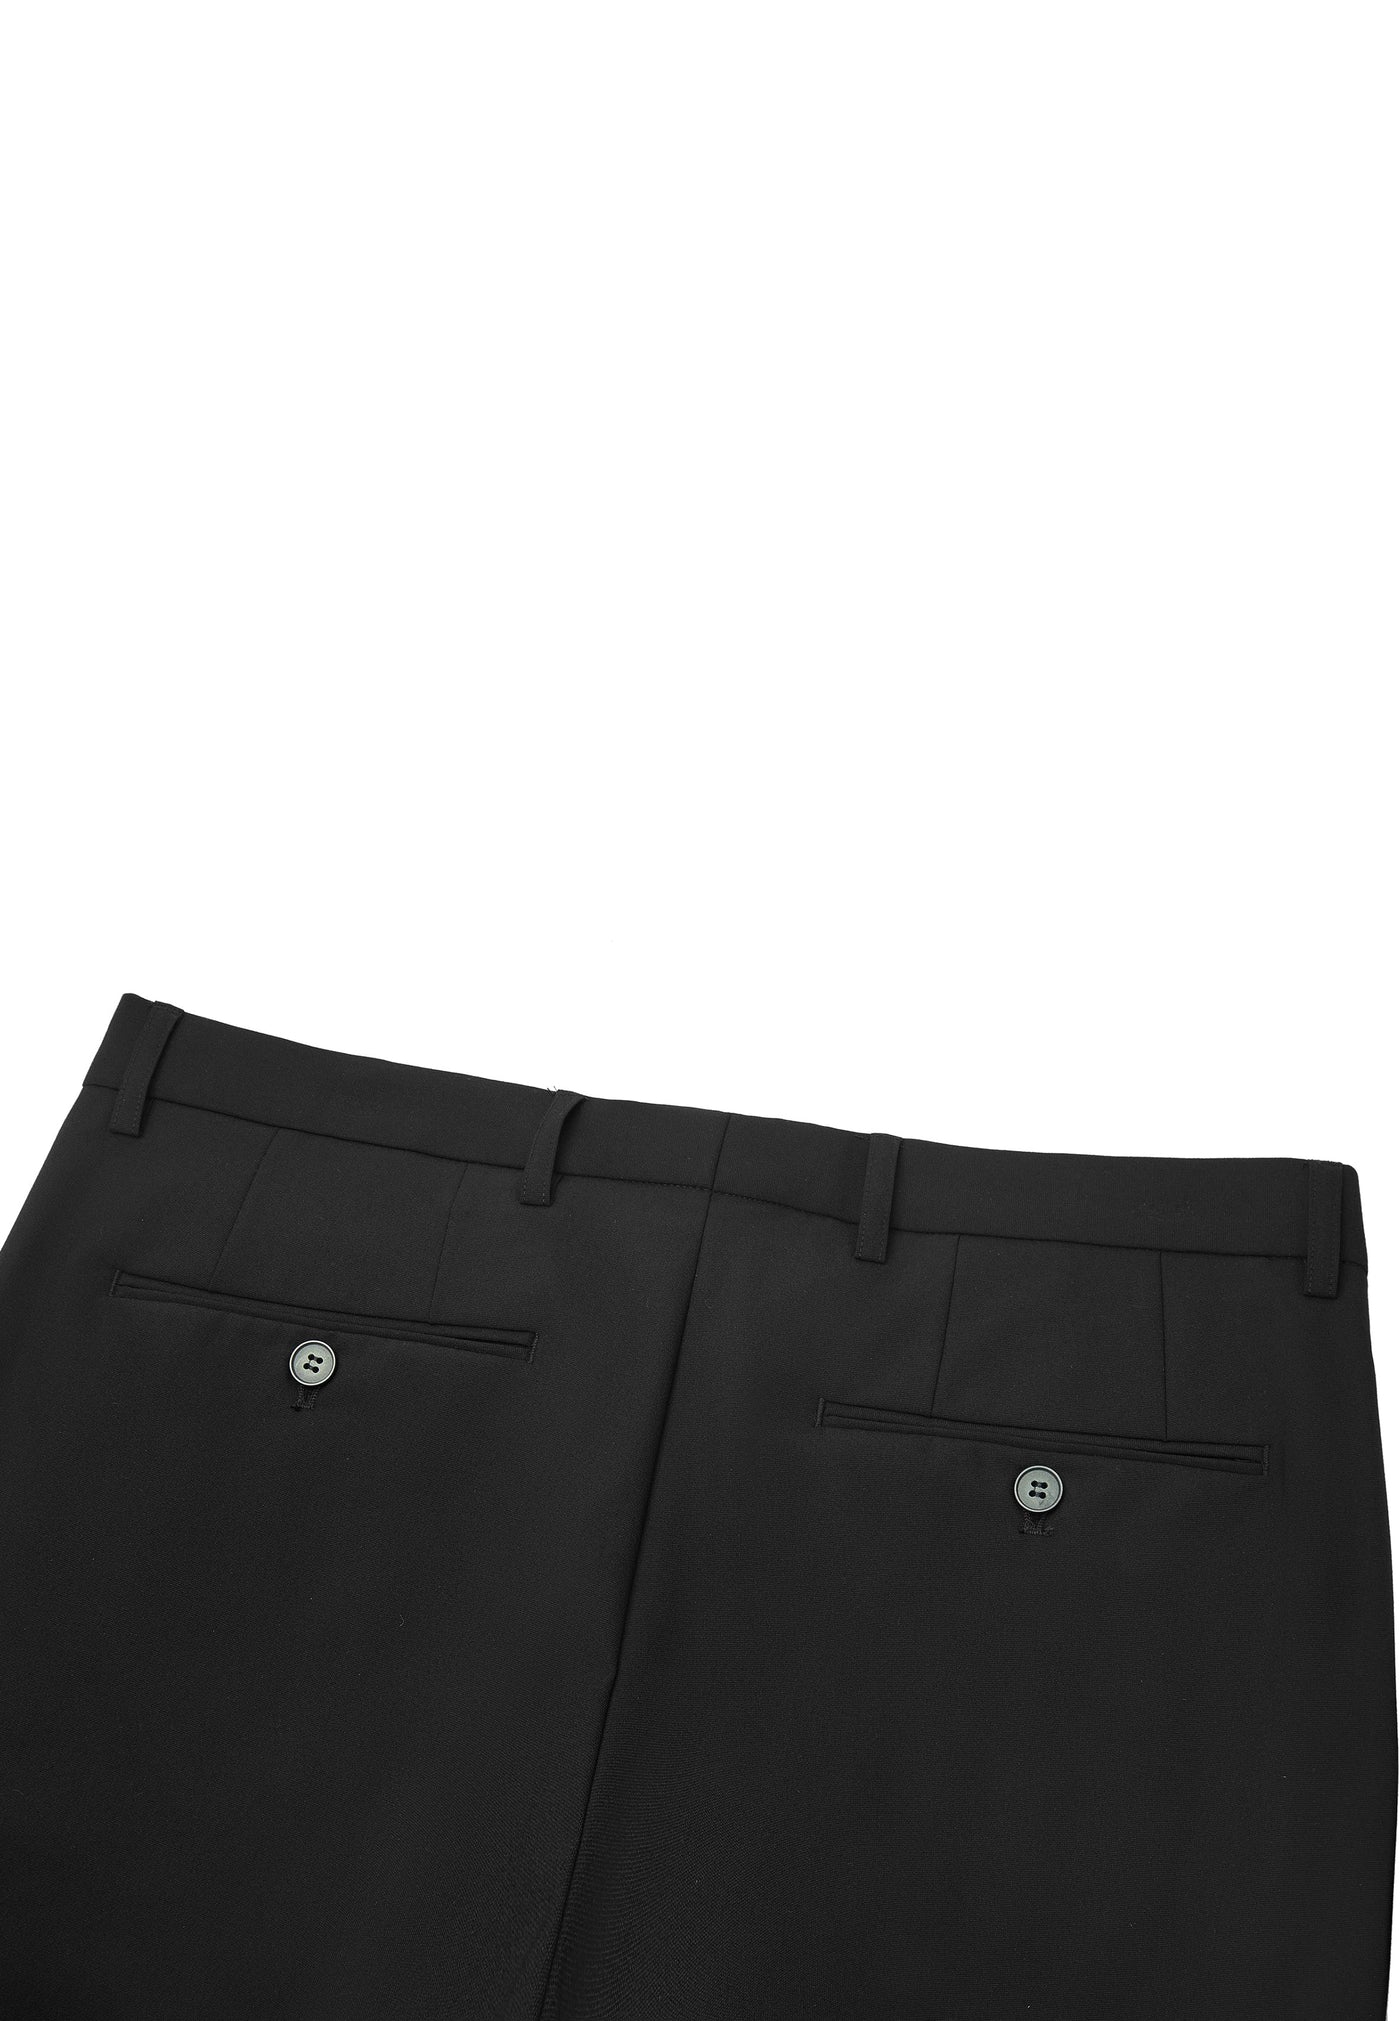 Men Clothing Multi-Way Stretch Anti-Bacterial Suit Pants Slim Fit